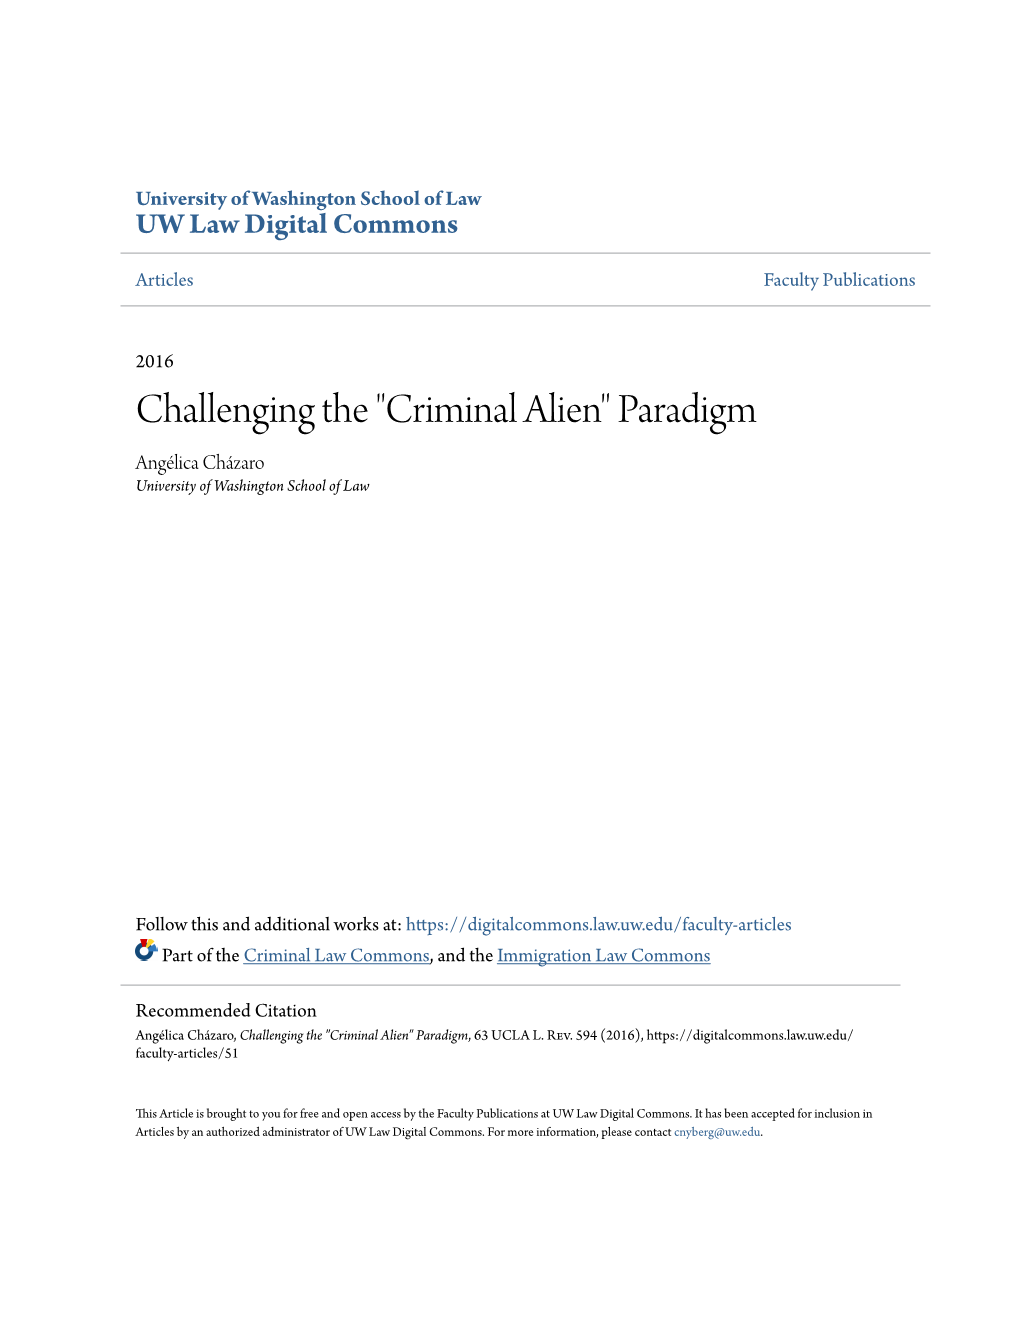 Challenging the "Criminal Alien" Paradigm Angélica Cházaro University of Washington School of Law